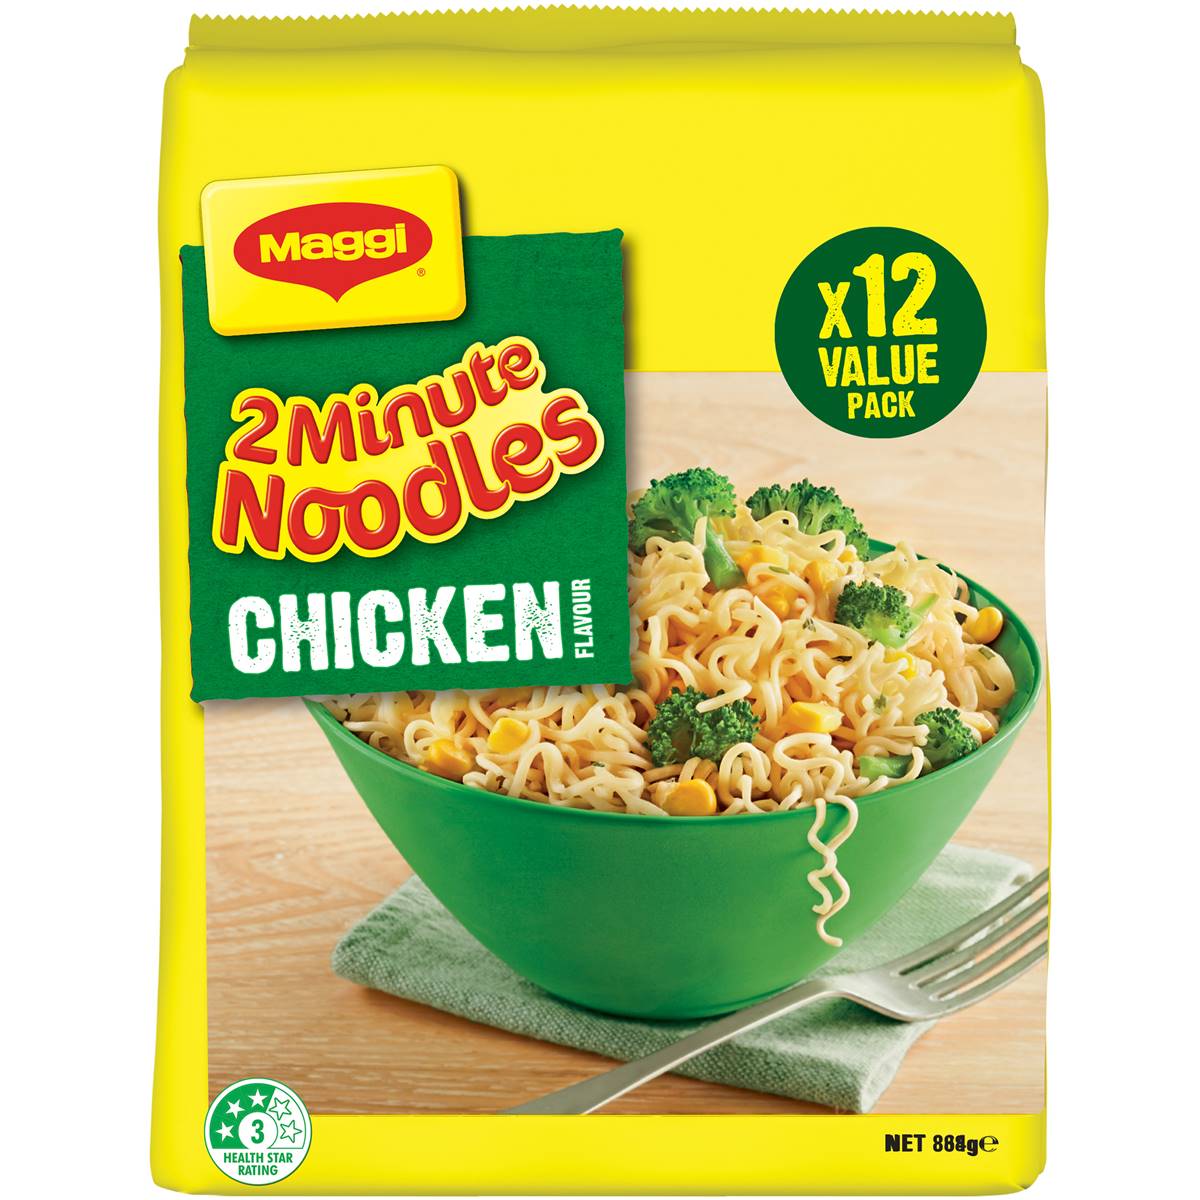 Maggi 2 minute noodles Chicken 12pk